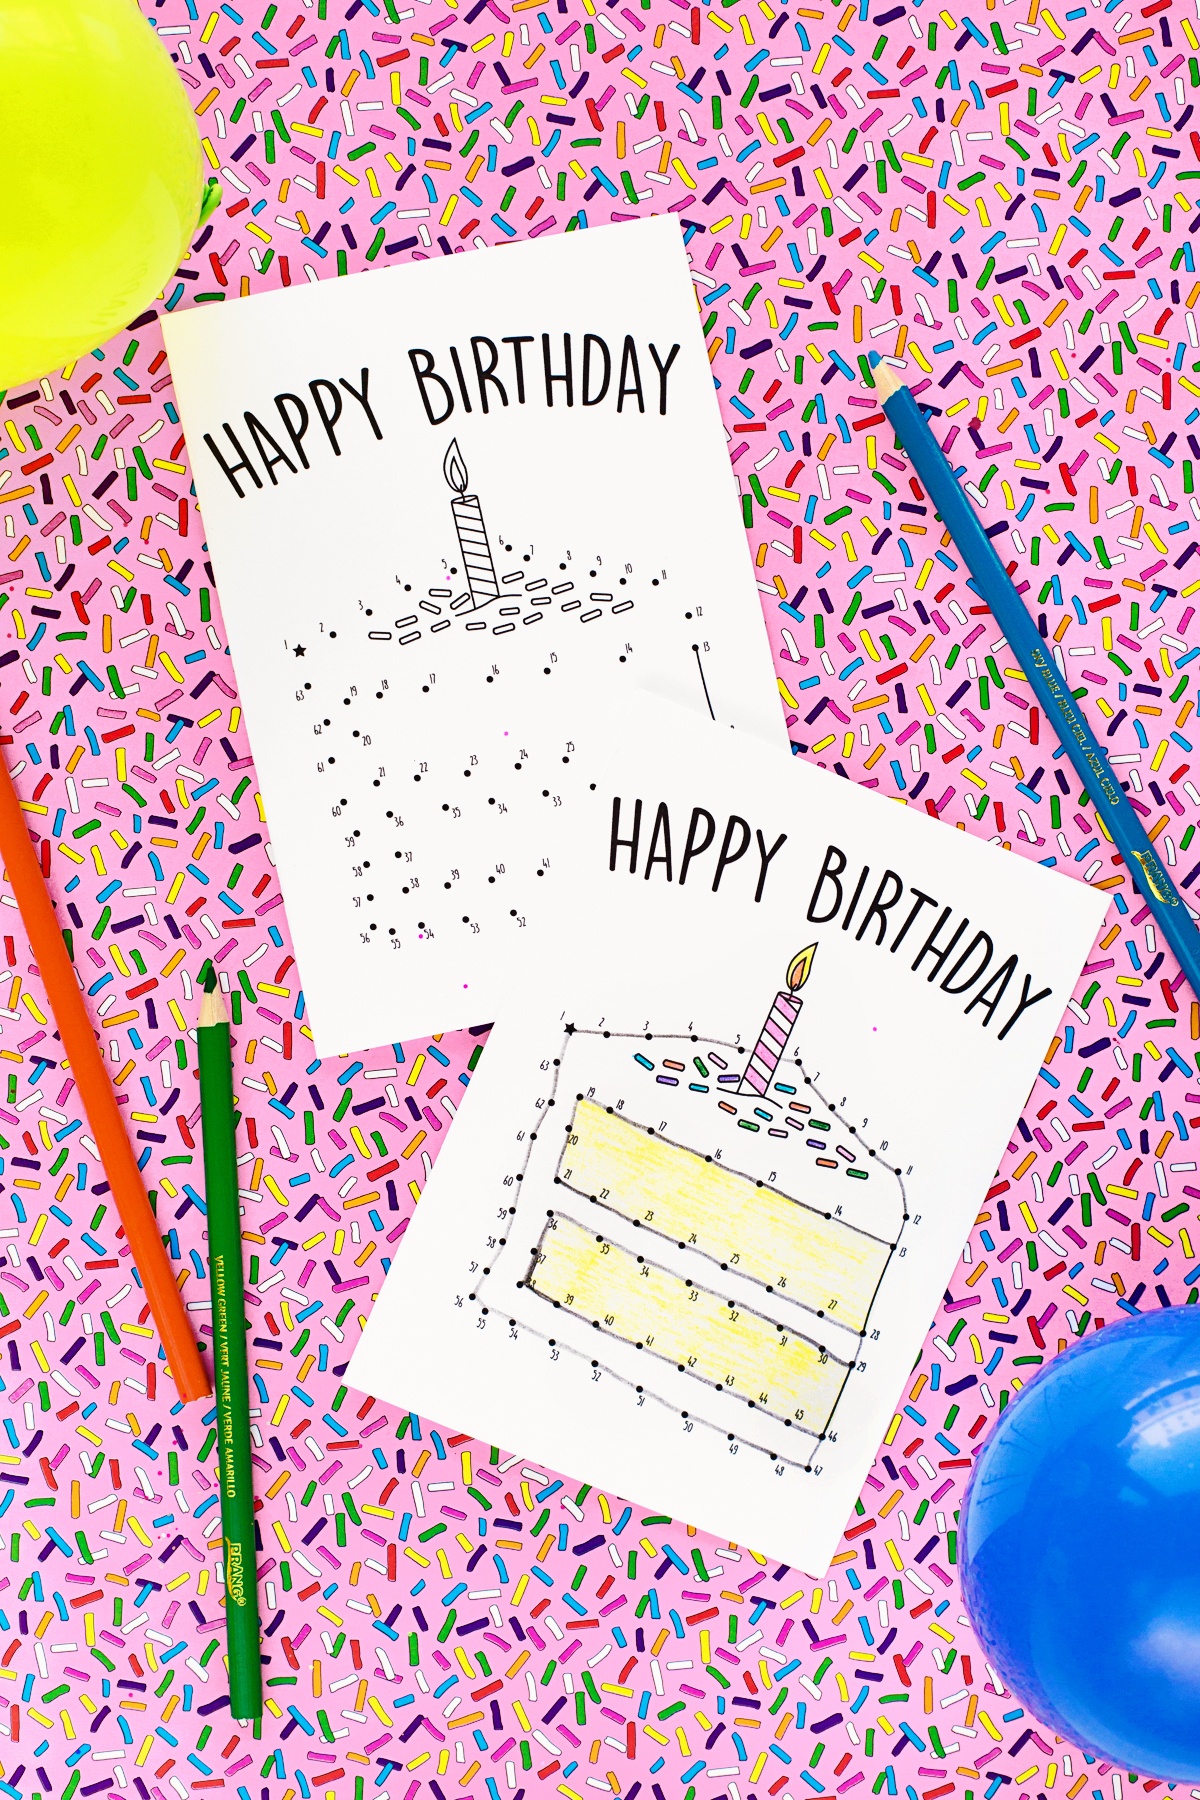 Free Printable Birthday Cards For Kids - Studio Diy - Free Printable Birthday Cards For Kids